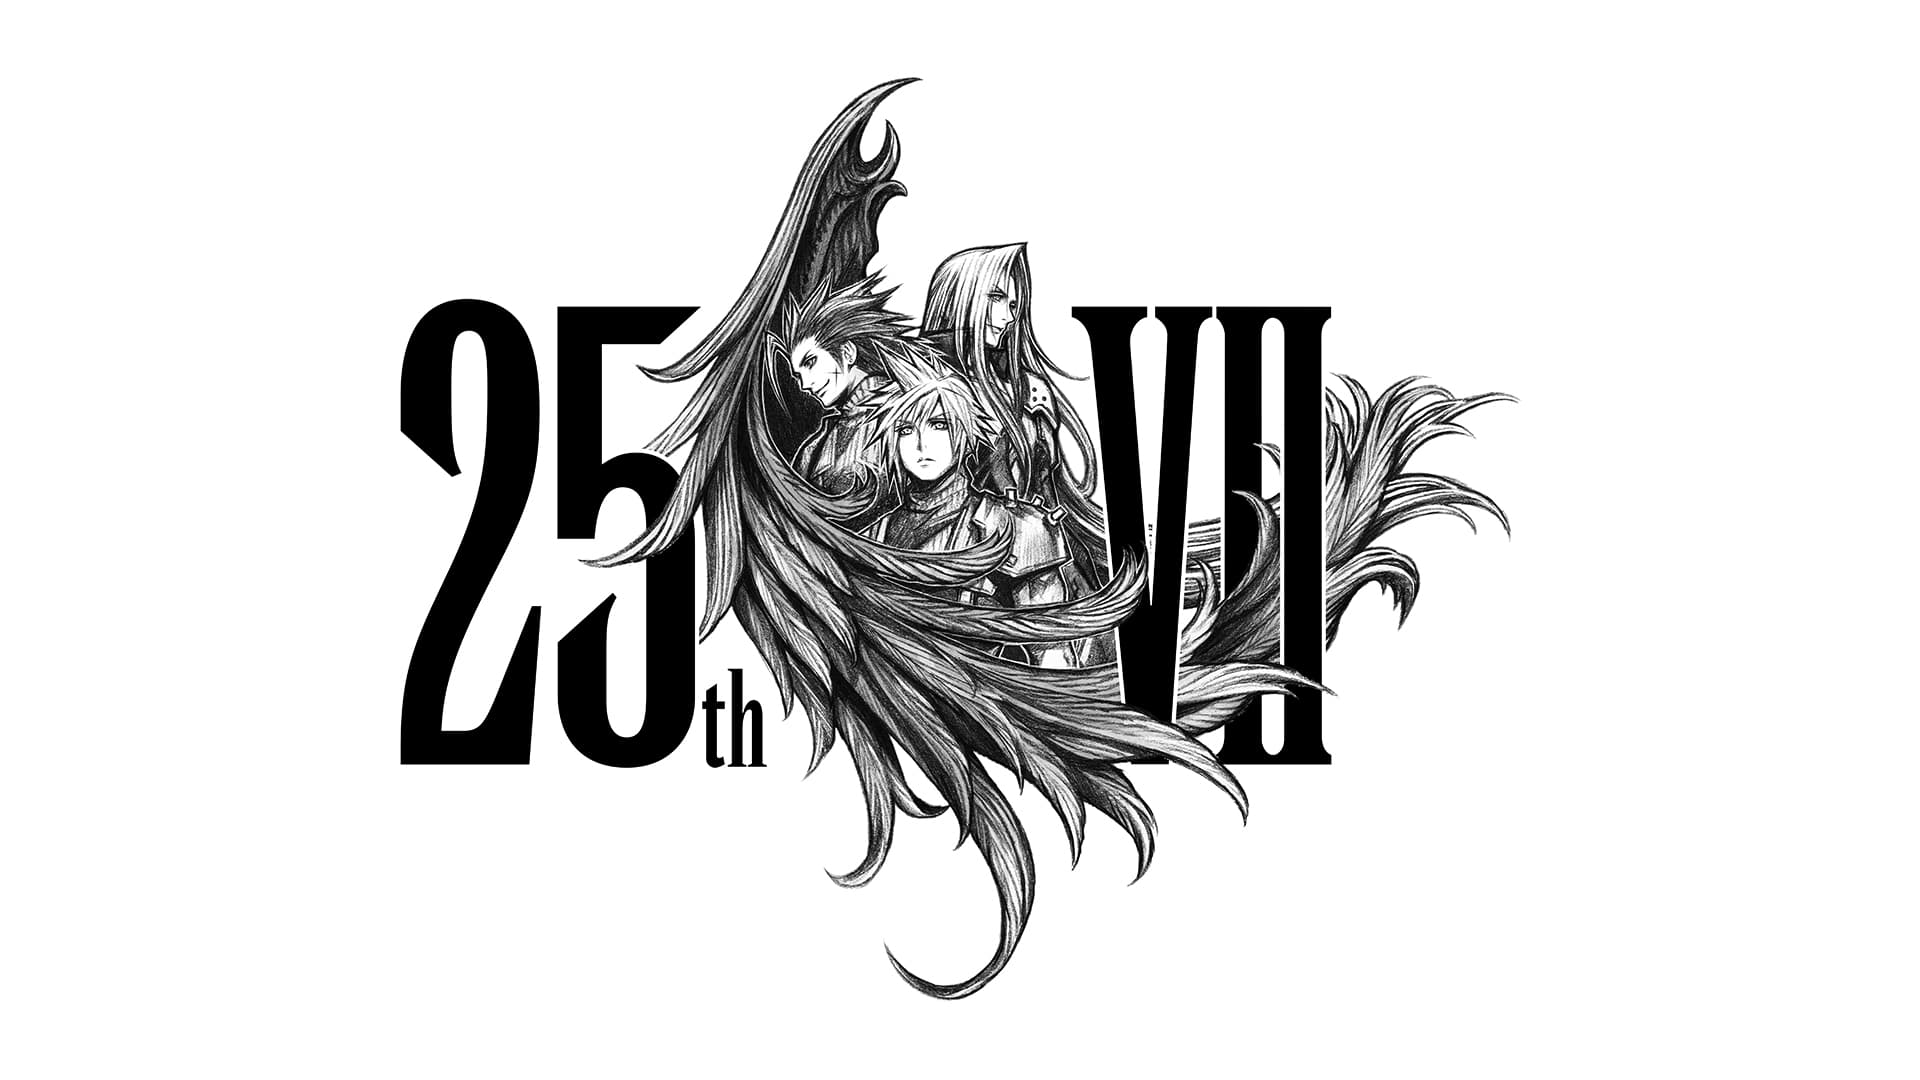 Final Fantasy VII: annunciato evento digitale